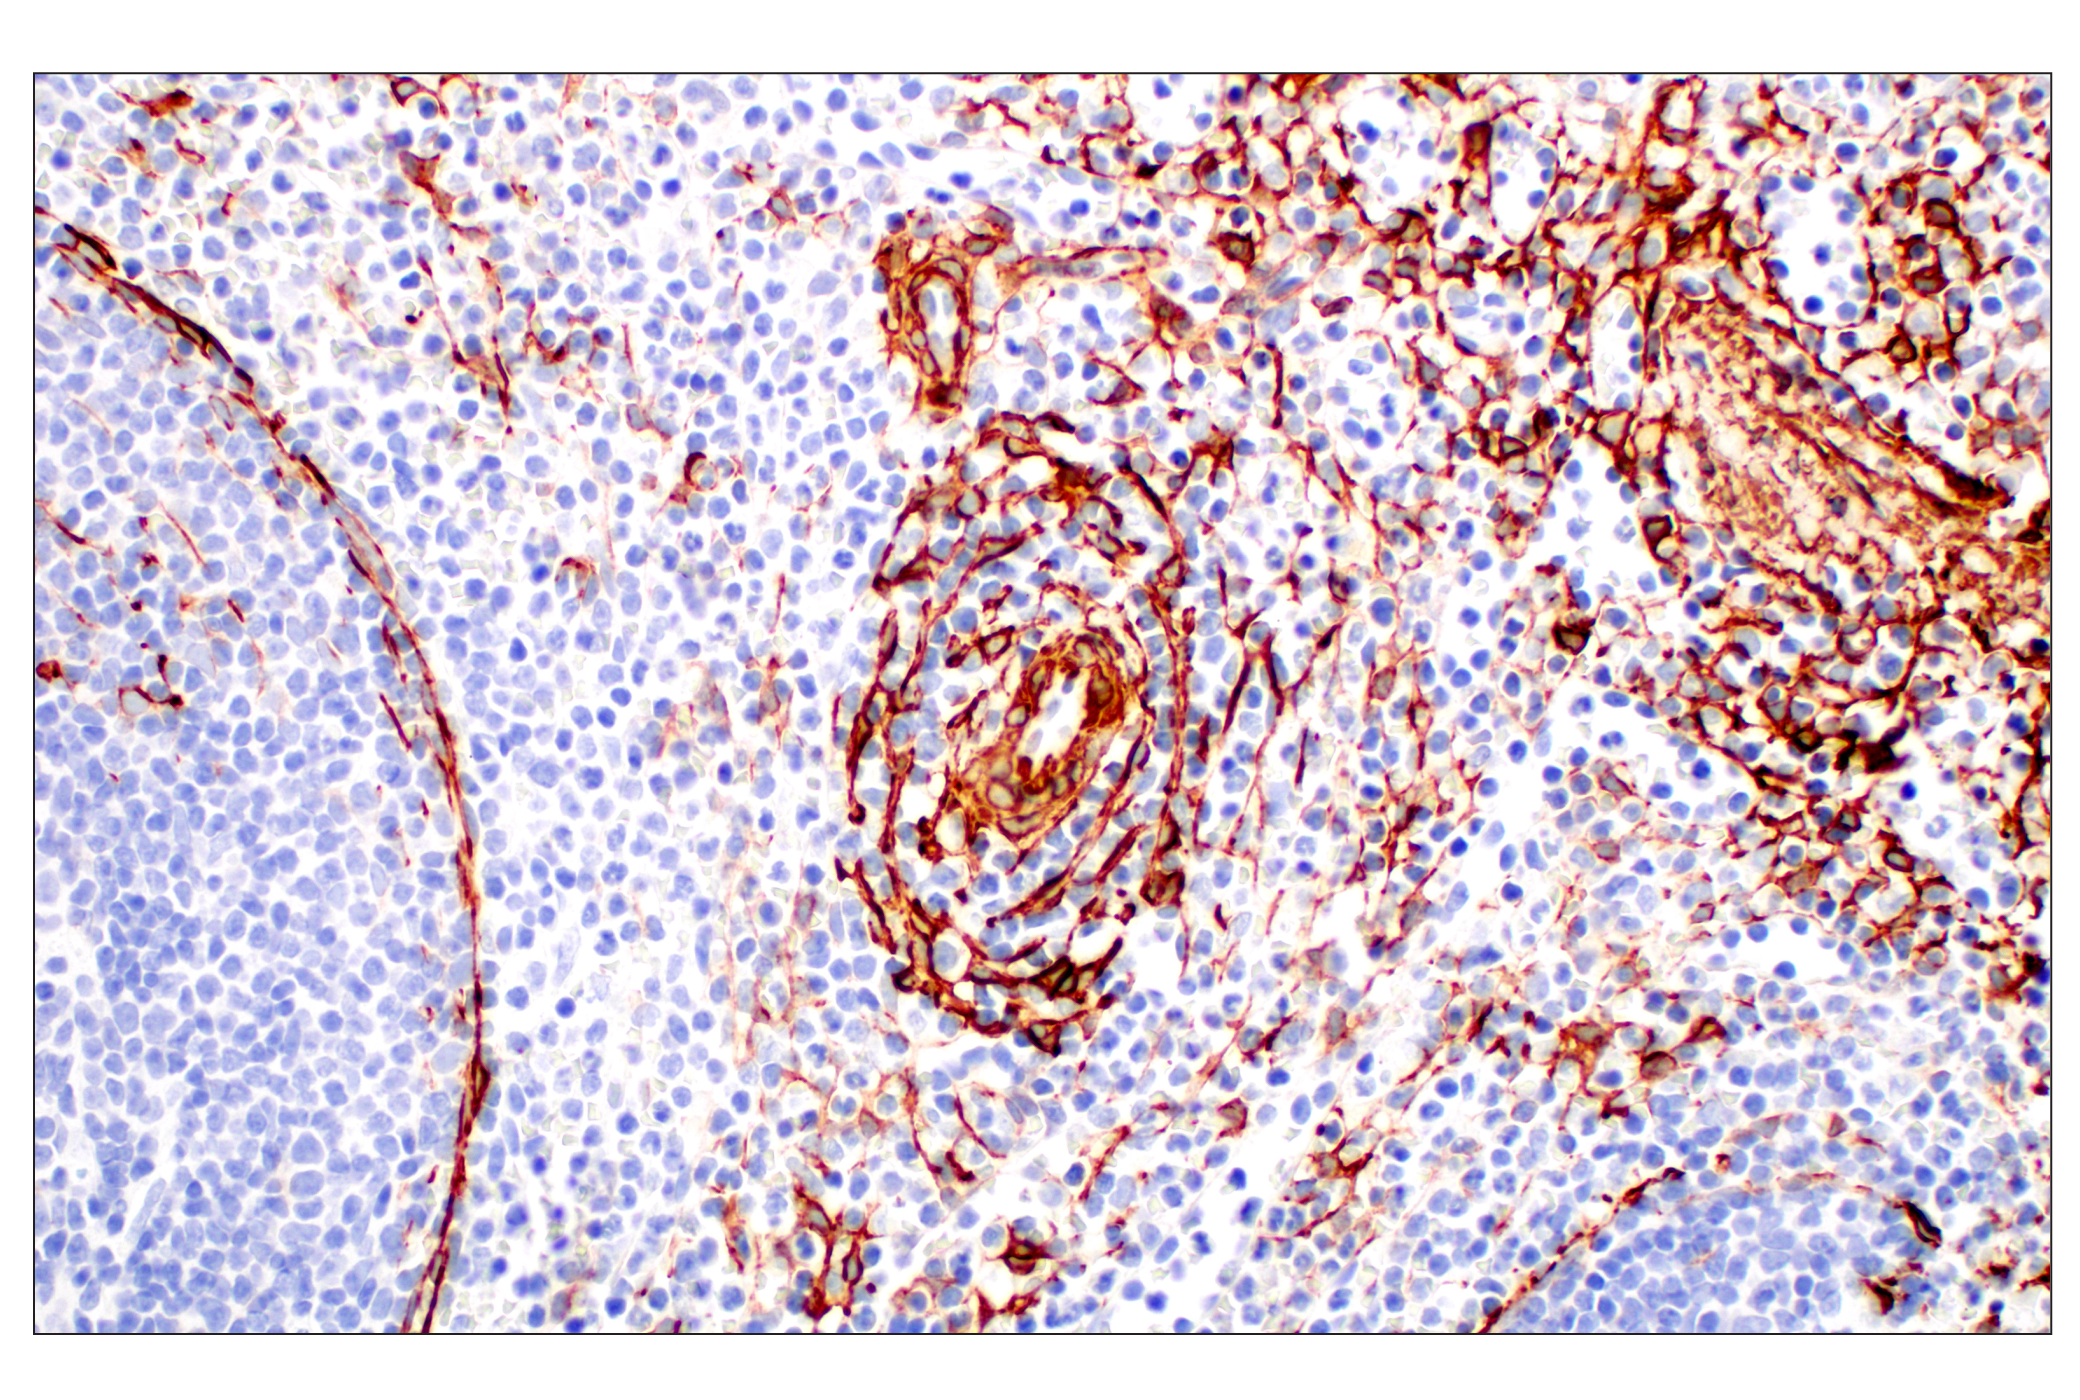  Image 53: Cancer Associated Fibroblast Marker Antibody Sampler Kit